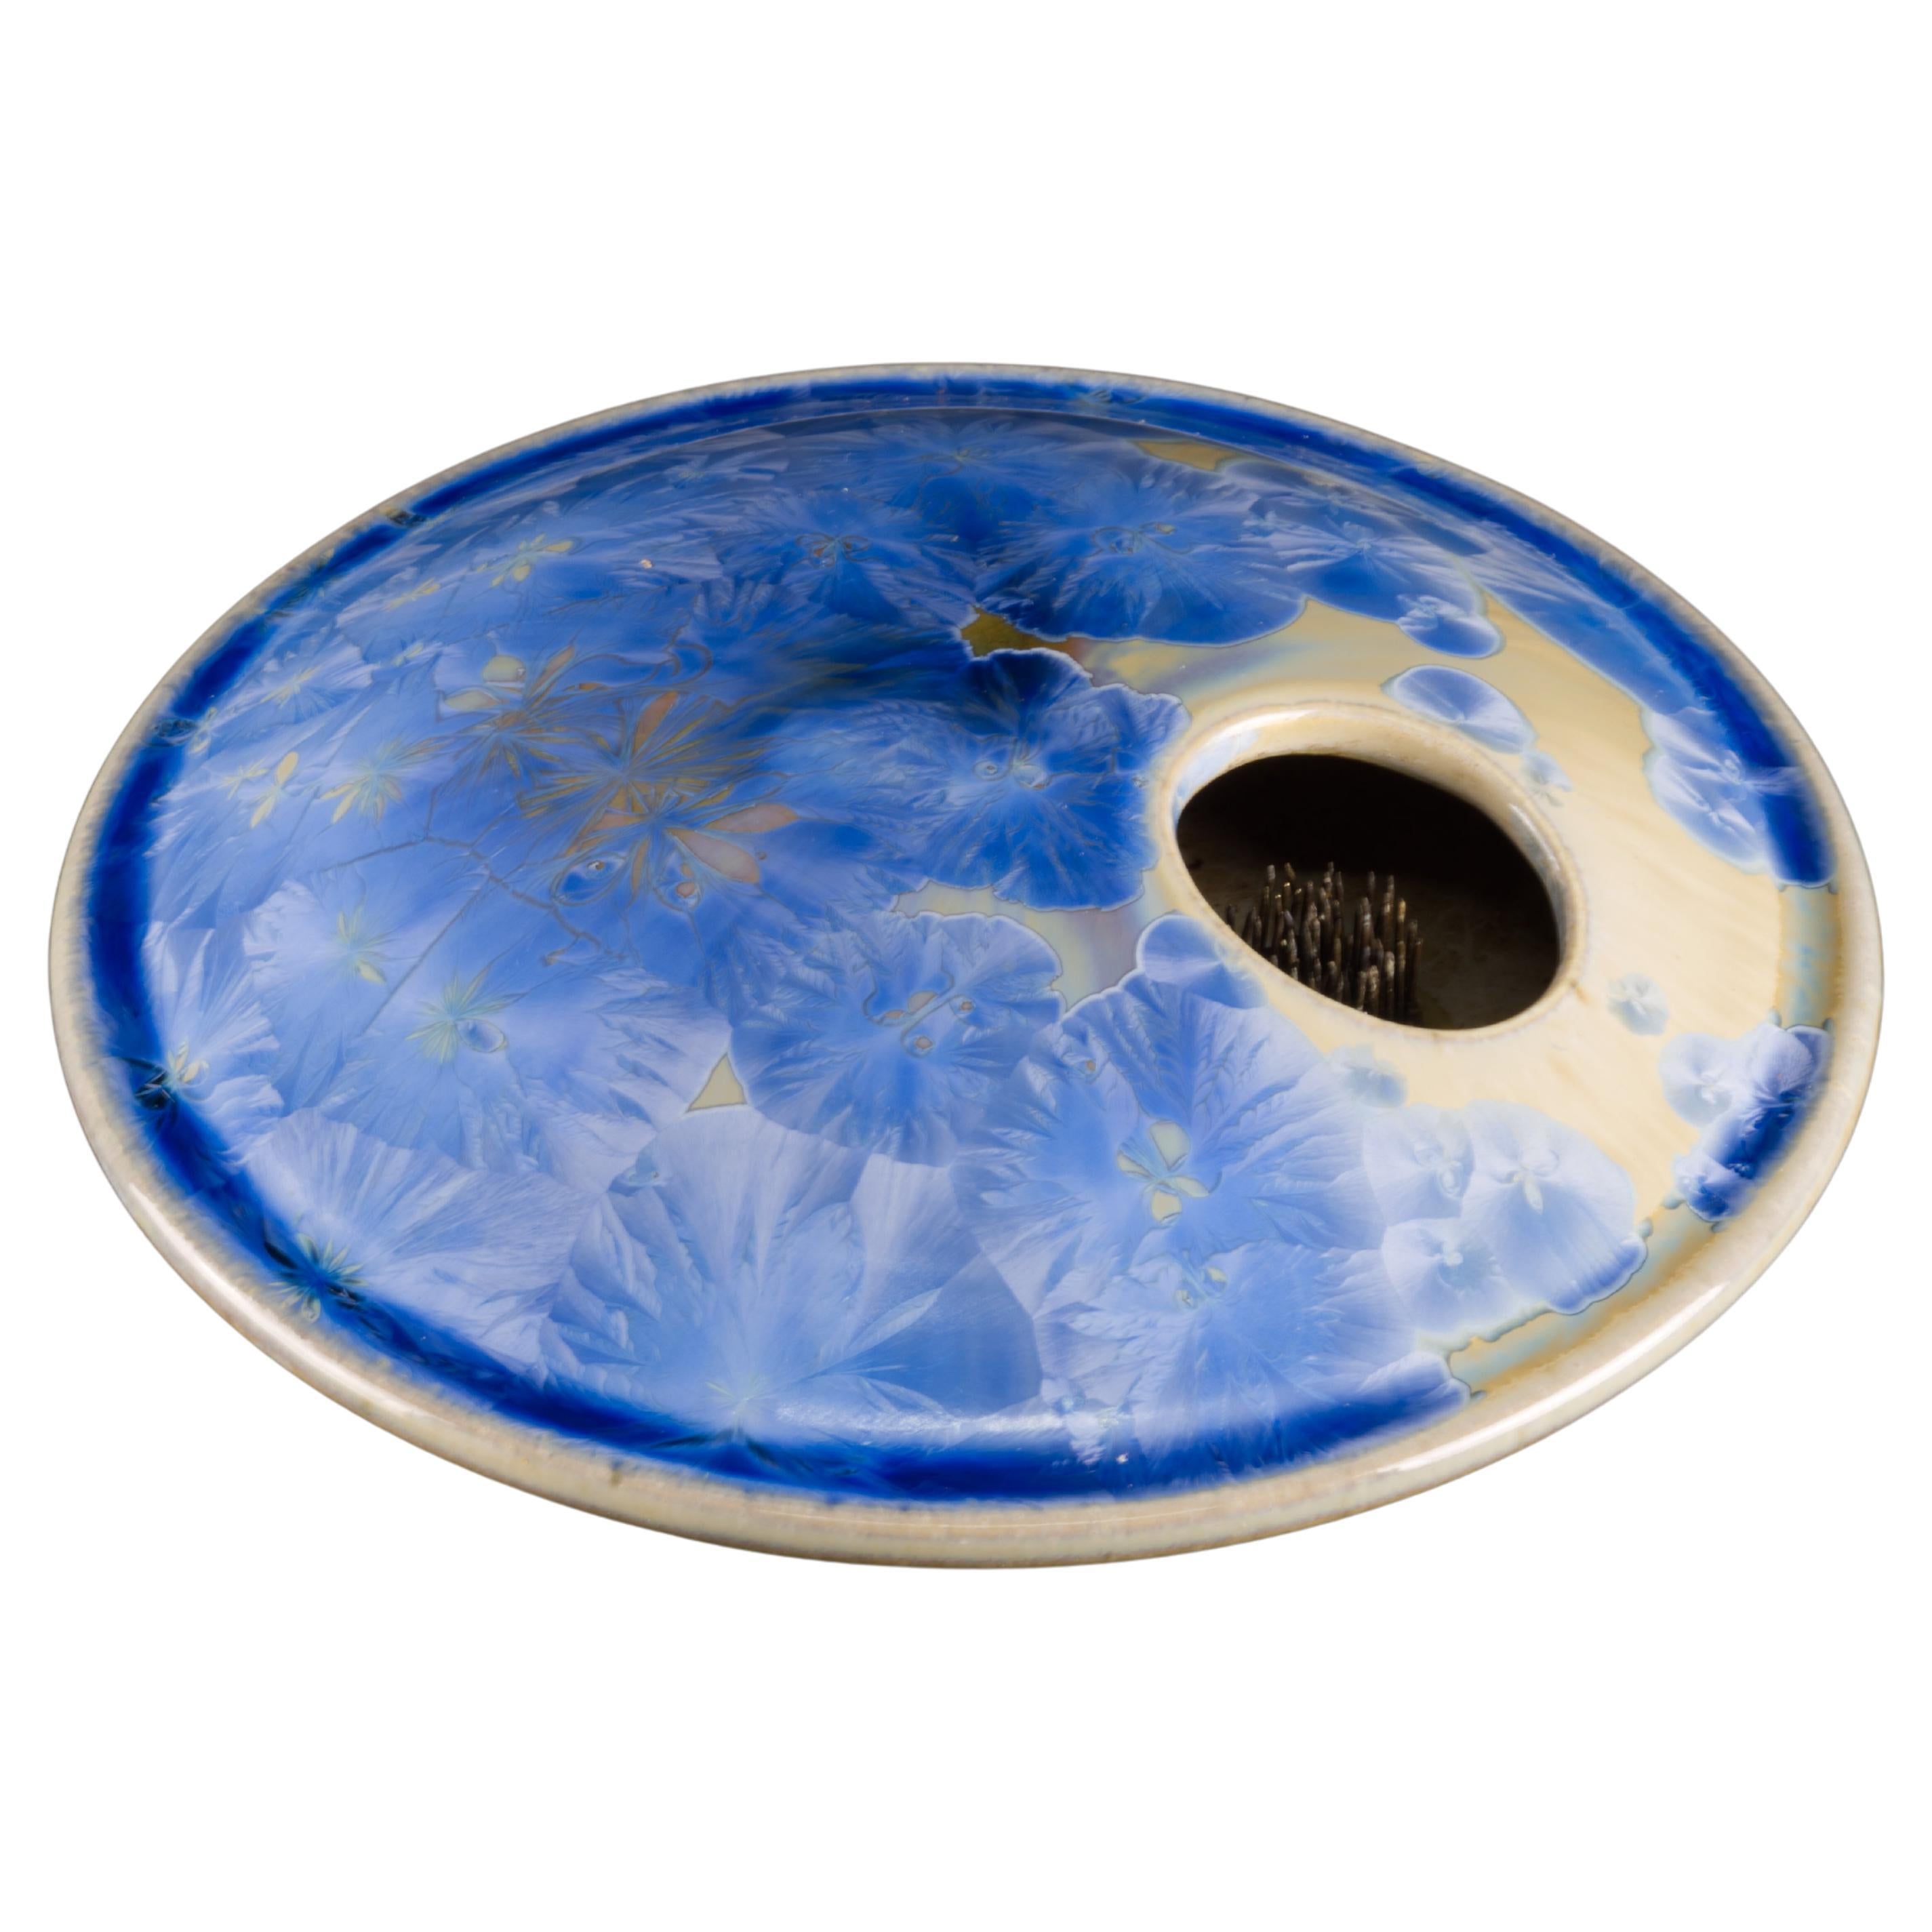 Crystalline Glaze Ceramic Ikebana Vase, Blue, American Studio Pottery, 2003 For Sale